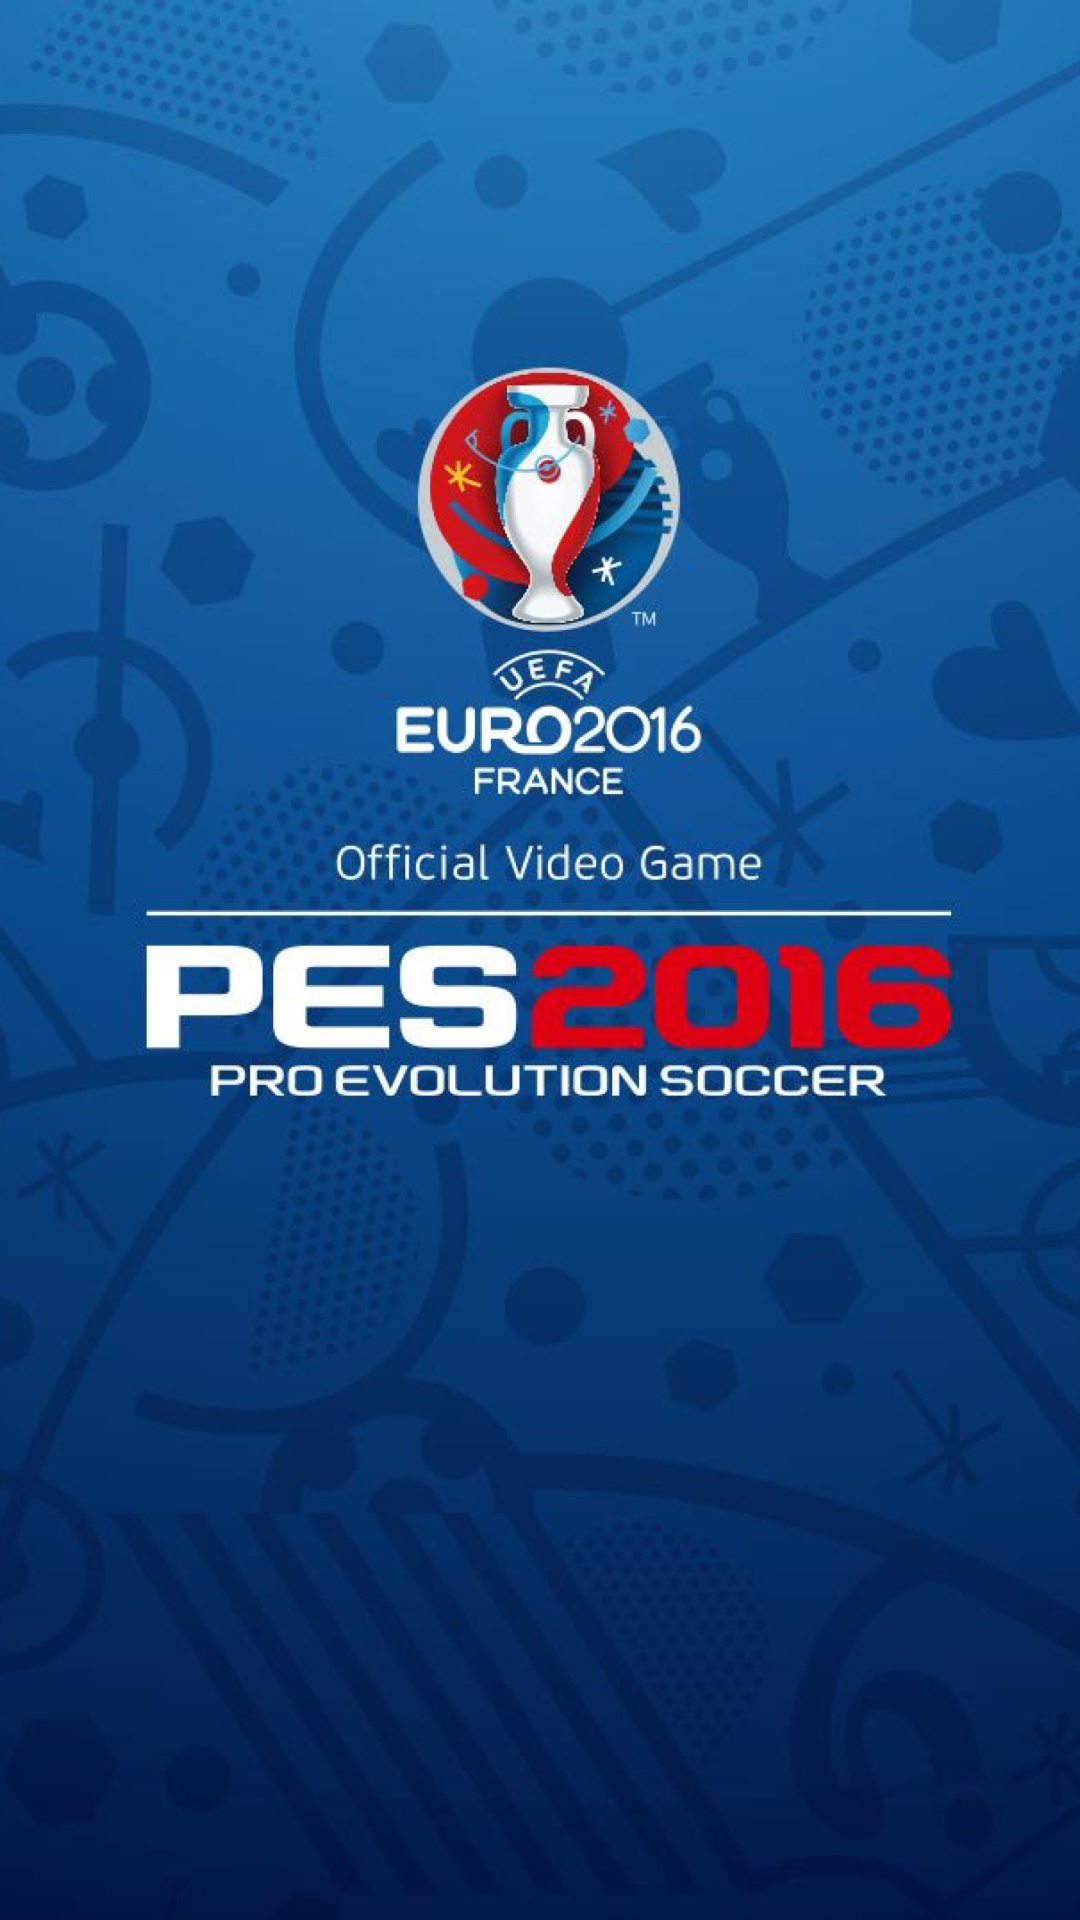 Das UEFA Euro 2016 in France Wallpaper 1080x1920